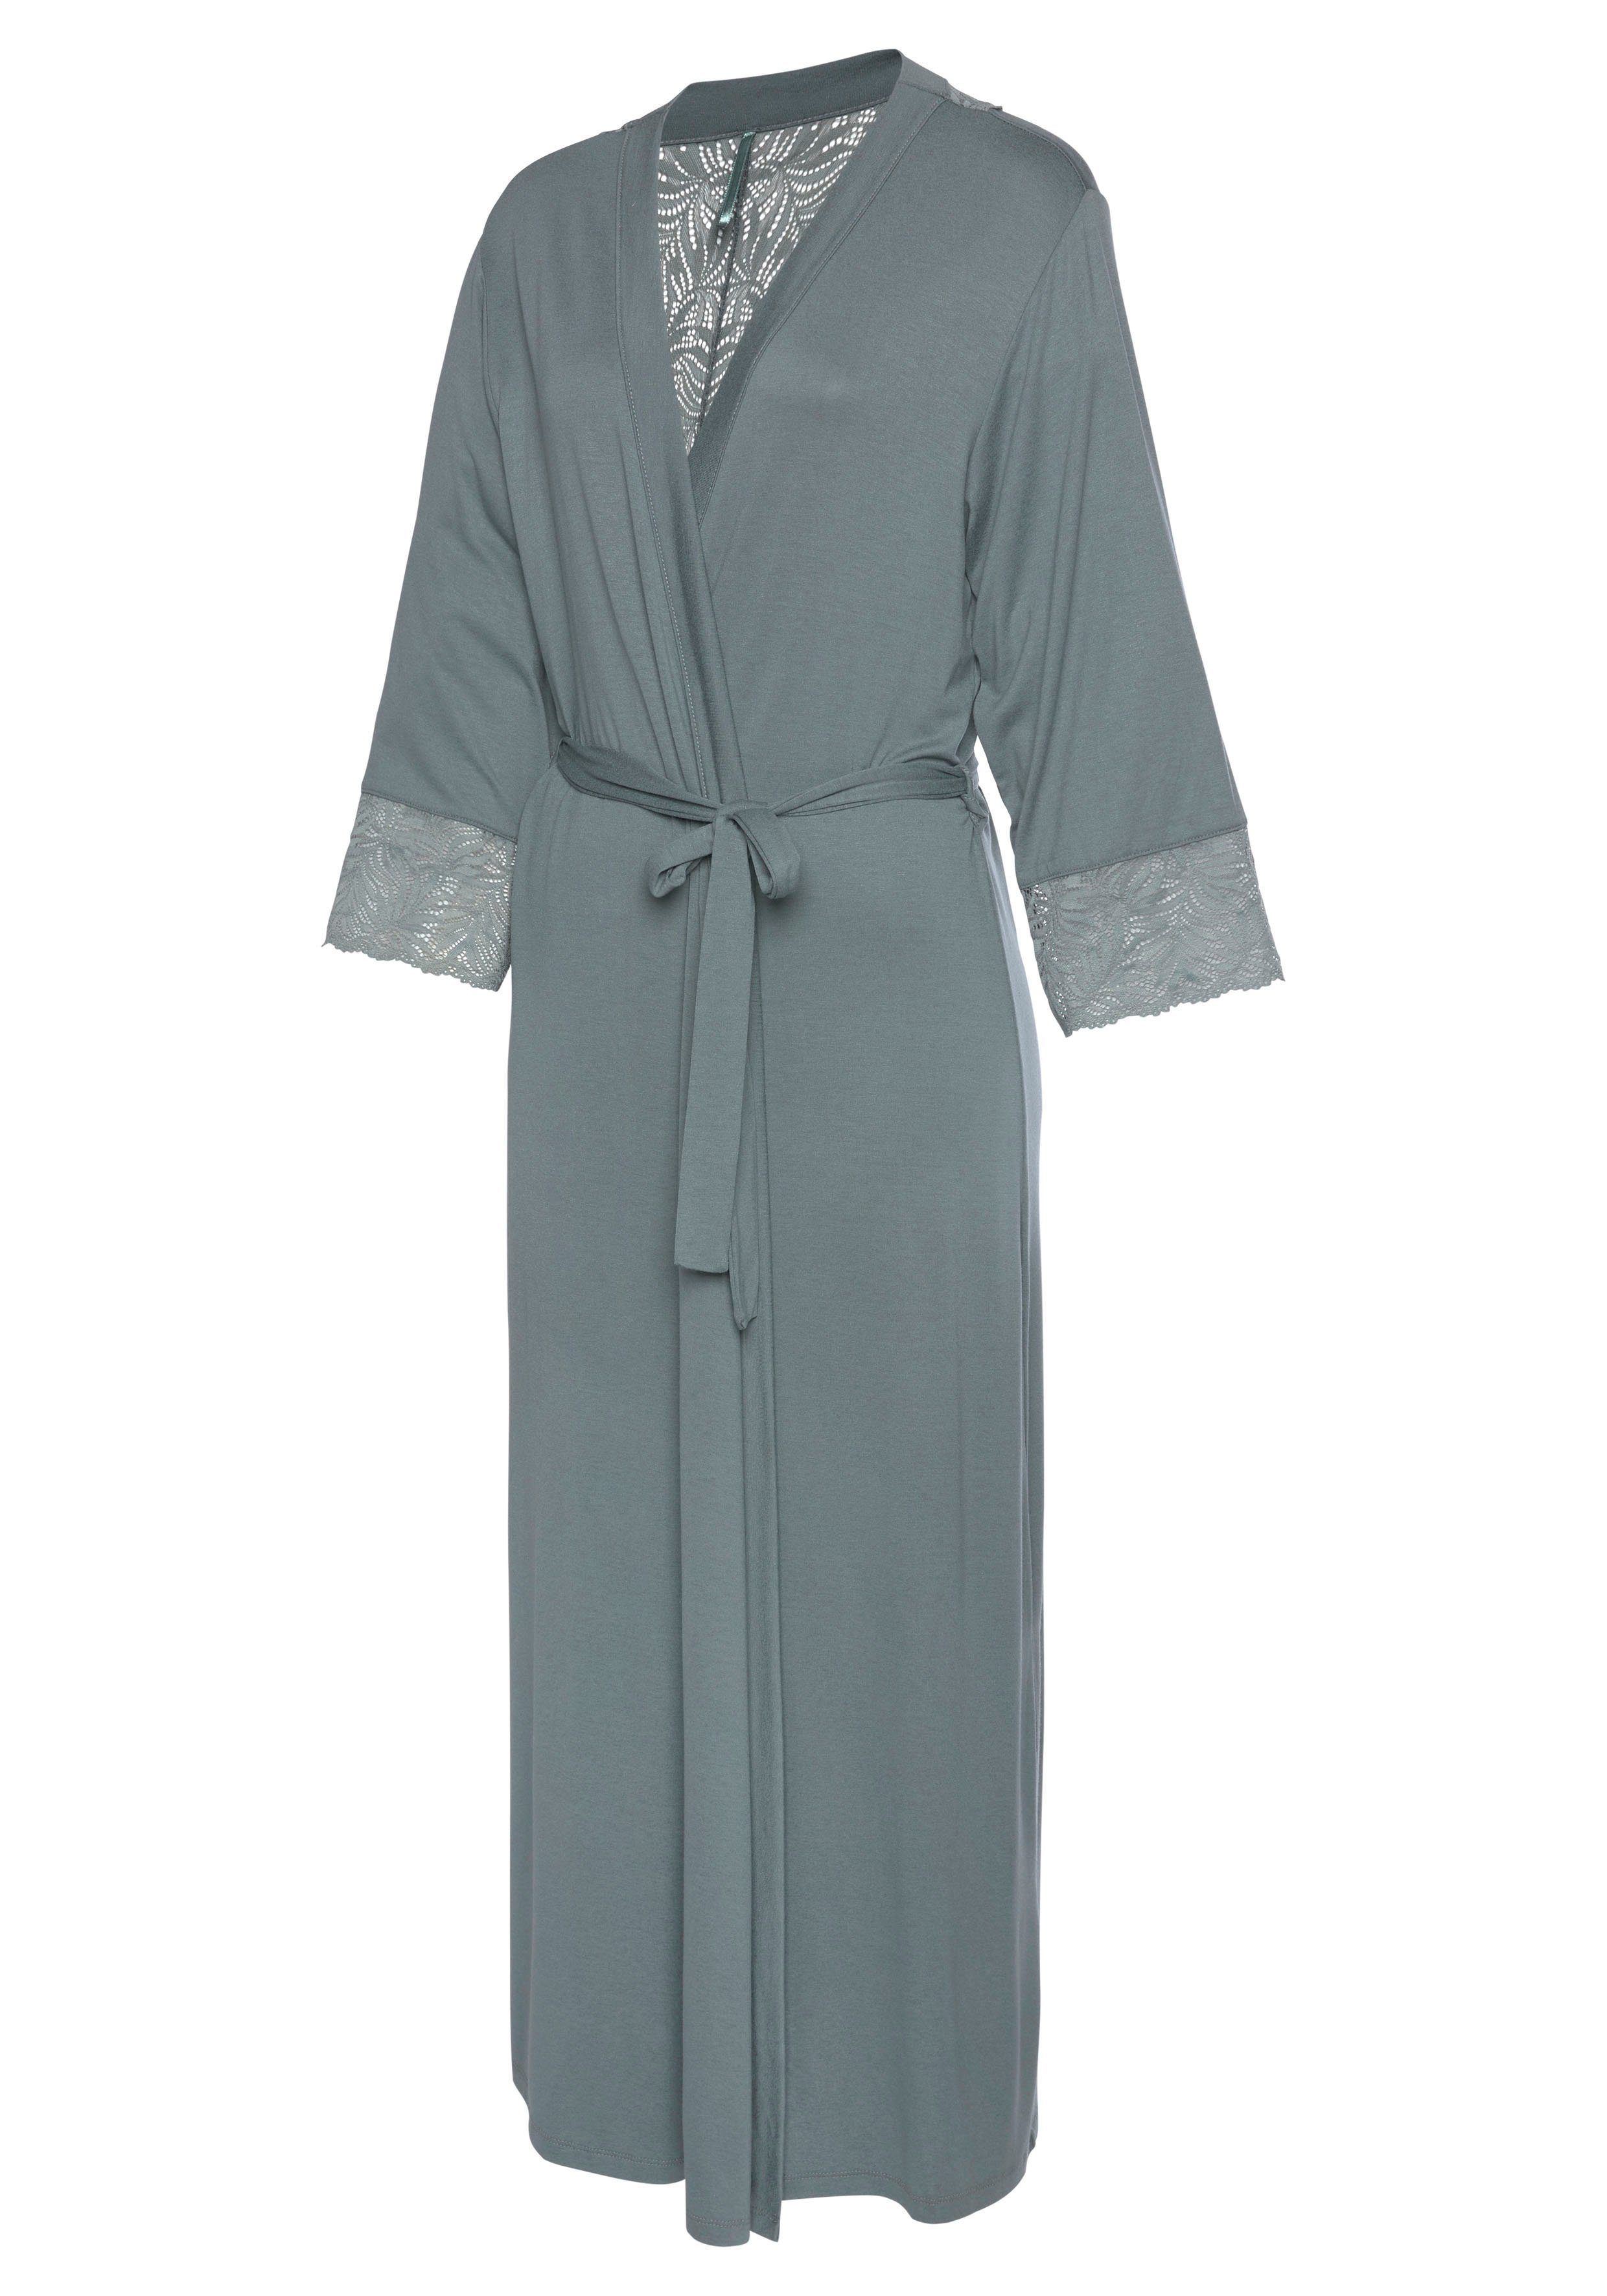 LASCANA Kimono, Langform, Spitzendetails petrol edlen mit Gürtel, Single-Jersey